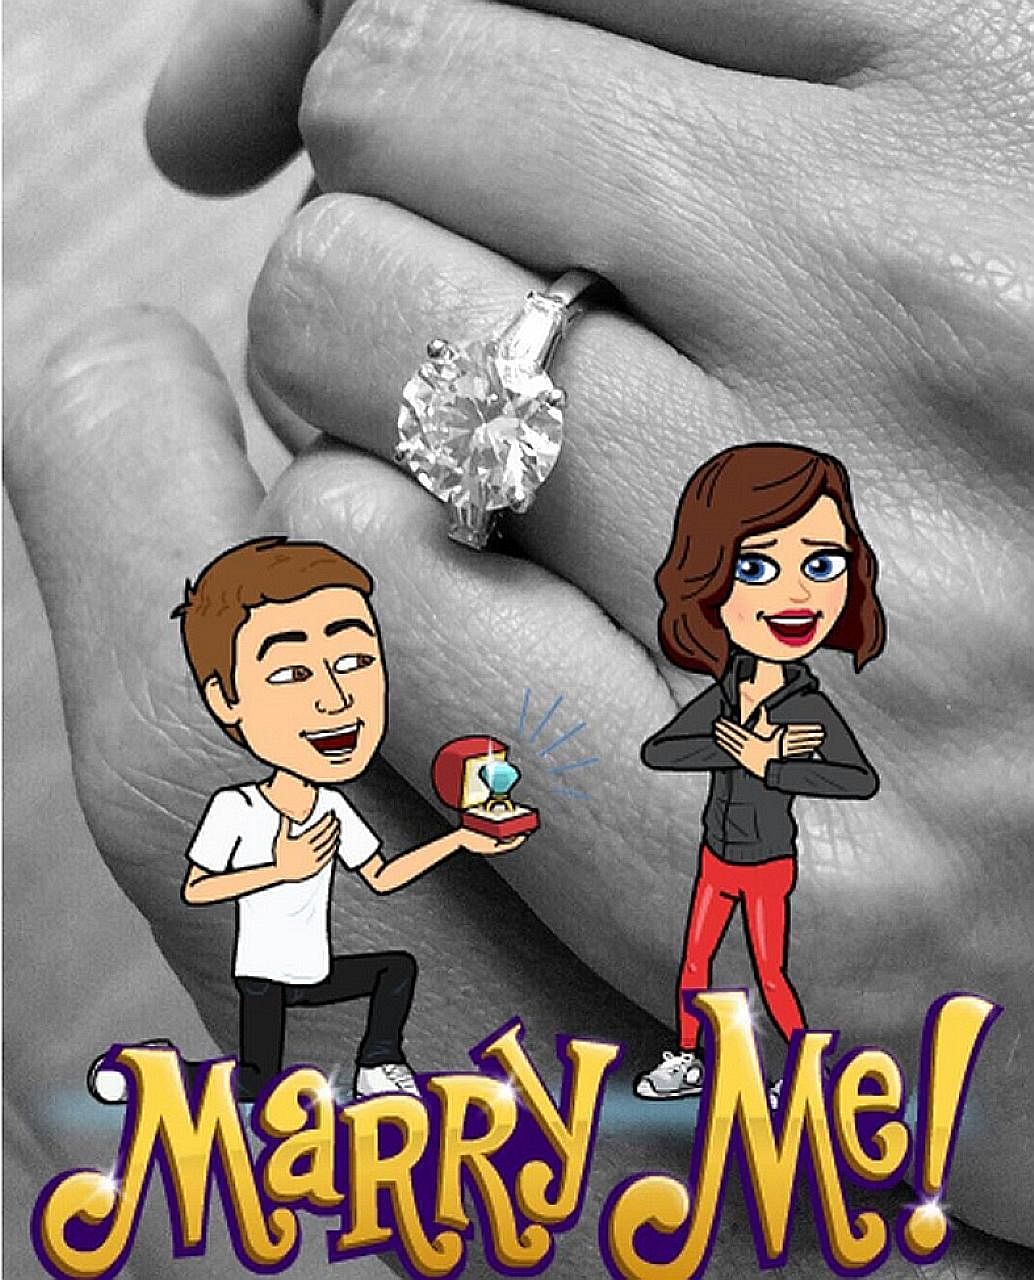 Miranda Kerr announced billionaire Evan Spiegel's (both left) proposal to her on Instagram (above).